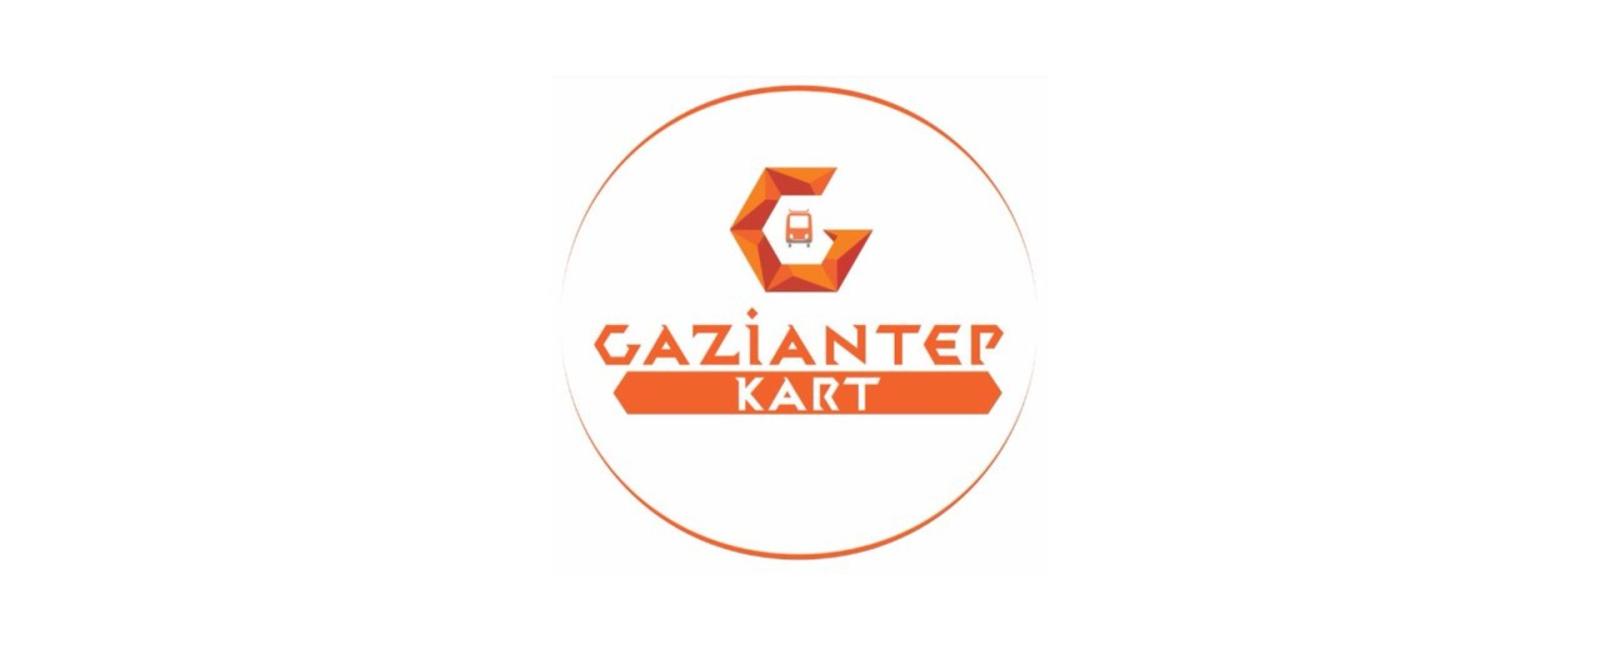 برنامج Gaziantep kart